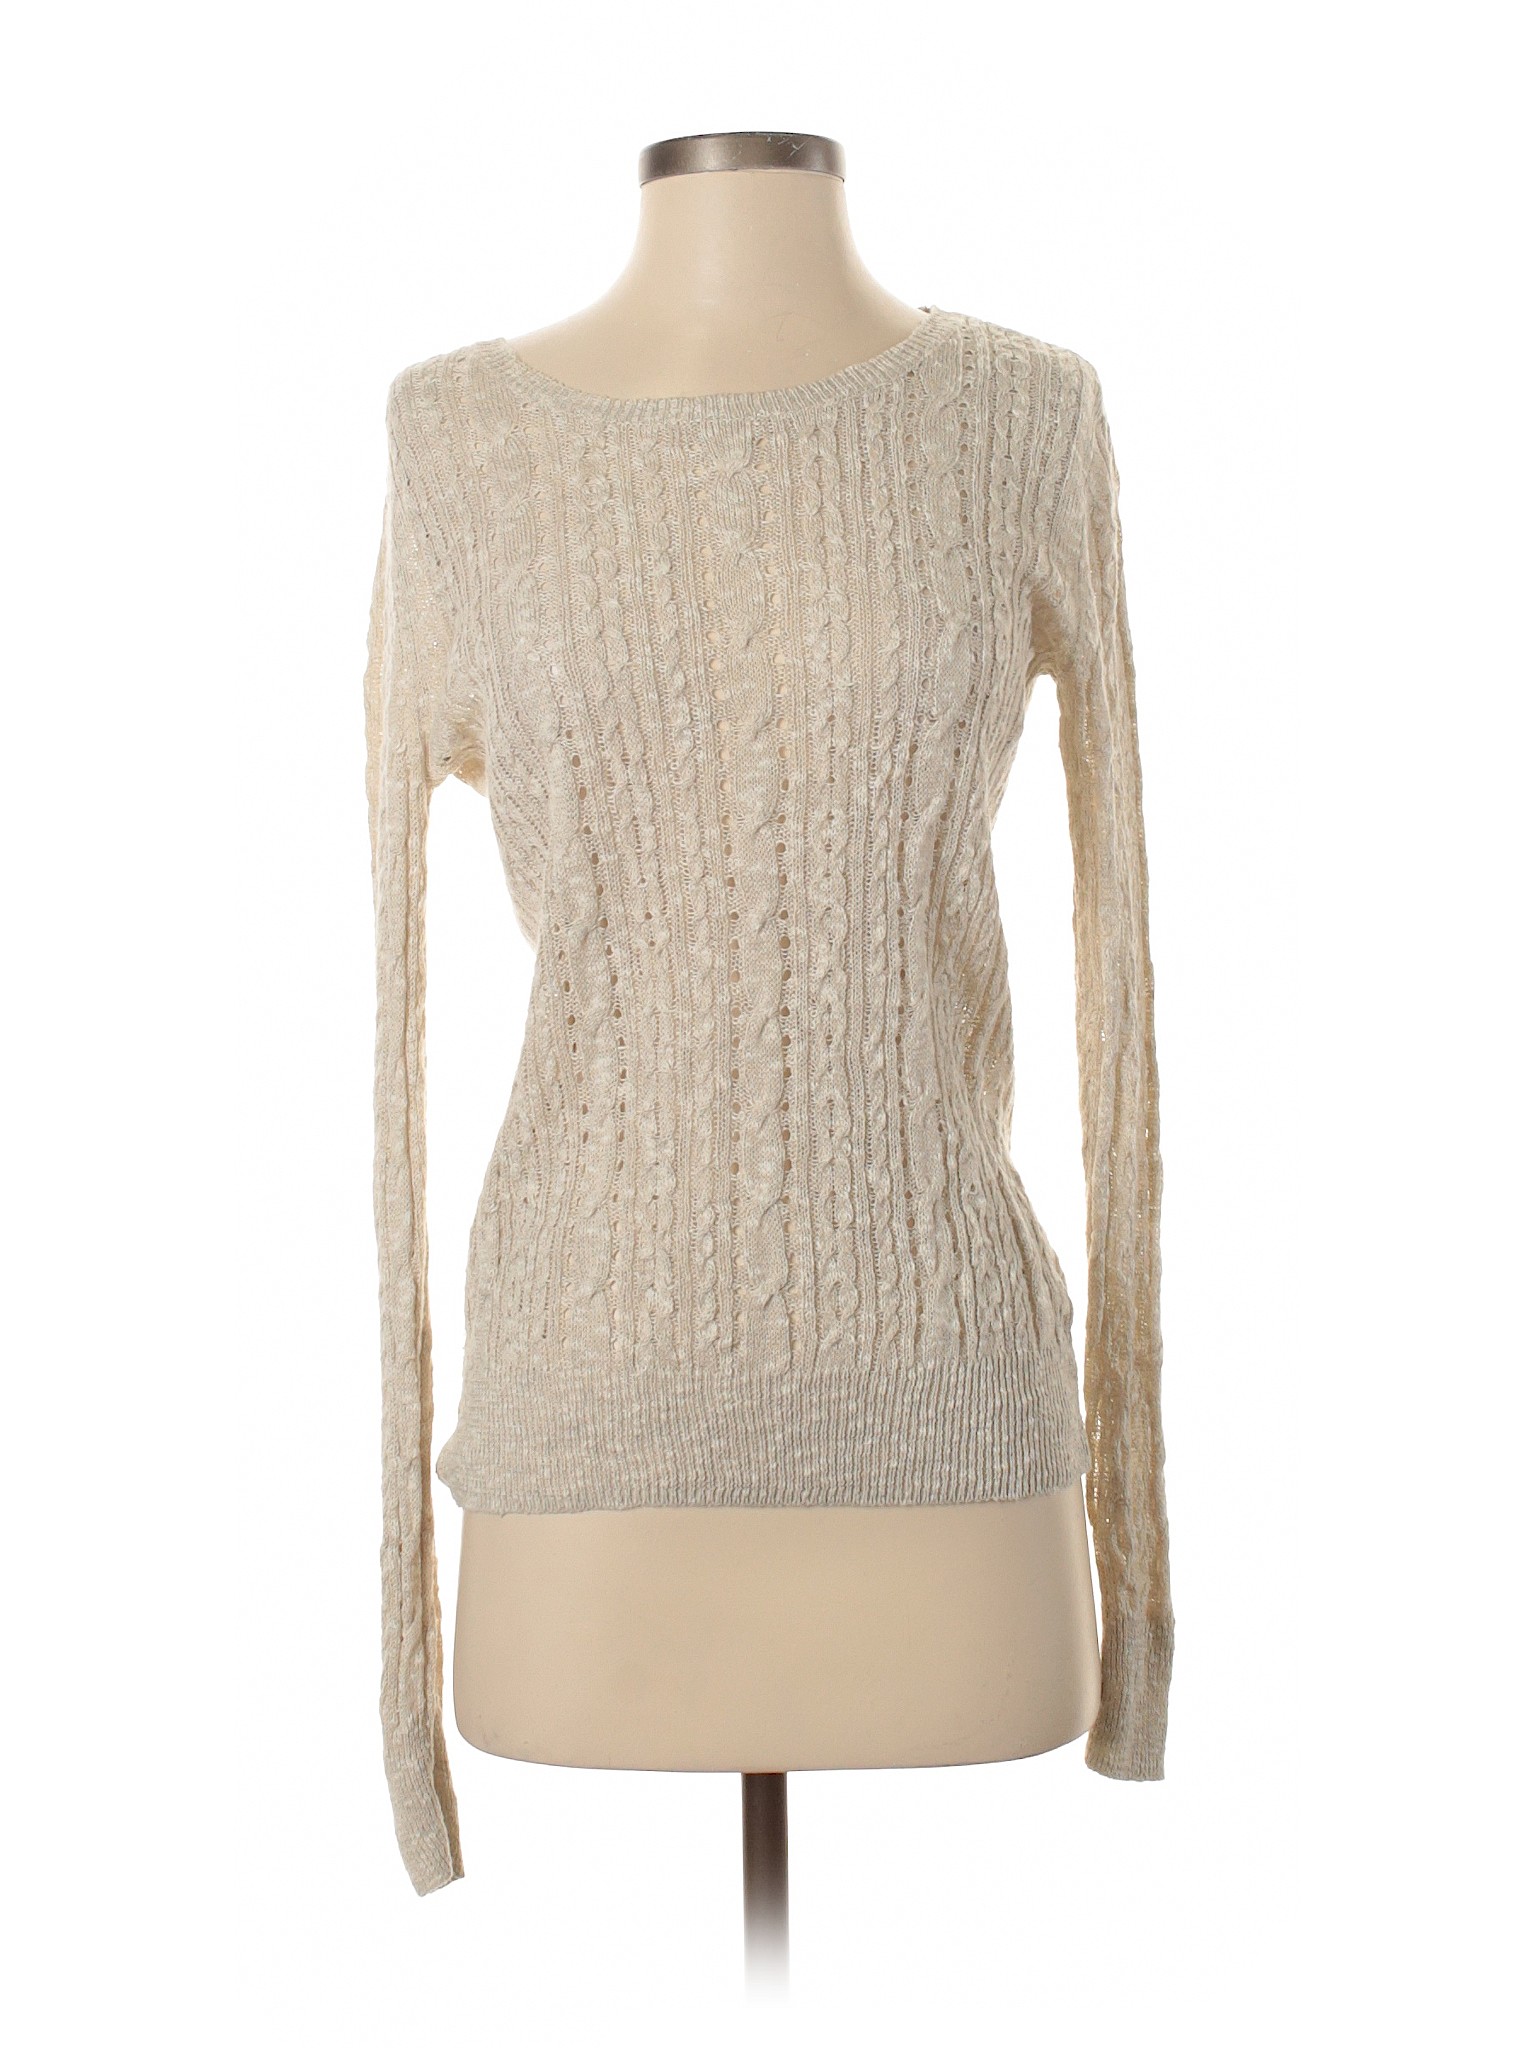 Cynthia Rowley TJX Women Brown Pullover Sweater S | eBay